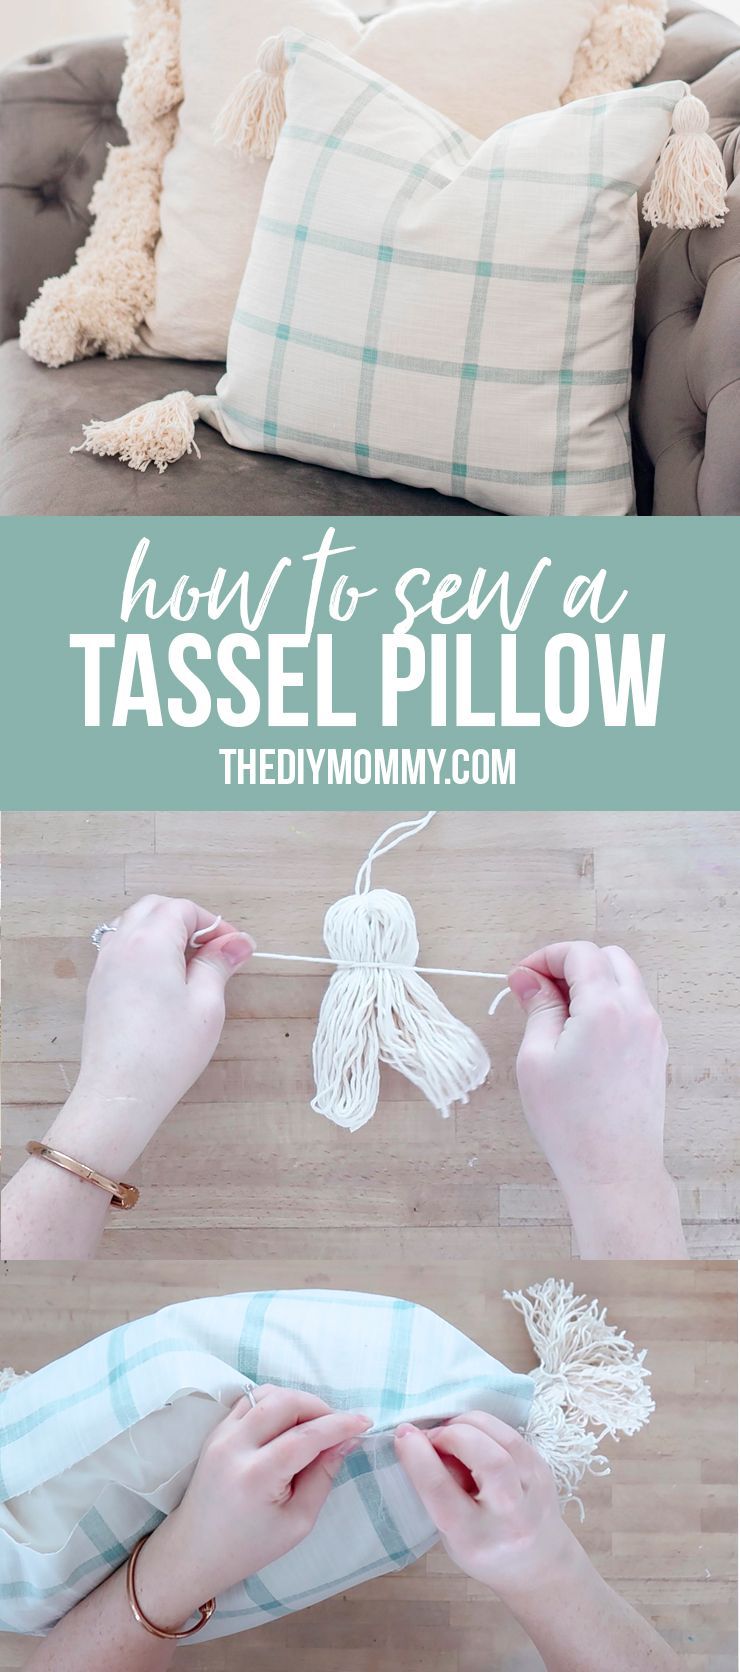 Sew a Tassel Pillow Cover | The DIY Mommy - Sew a Tassel Pillow Cover | The DIY Mommy -   19 diy Pillows with tassels ideas